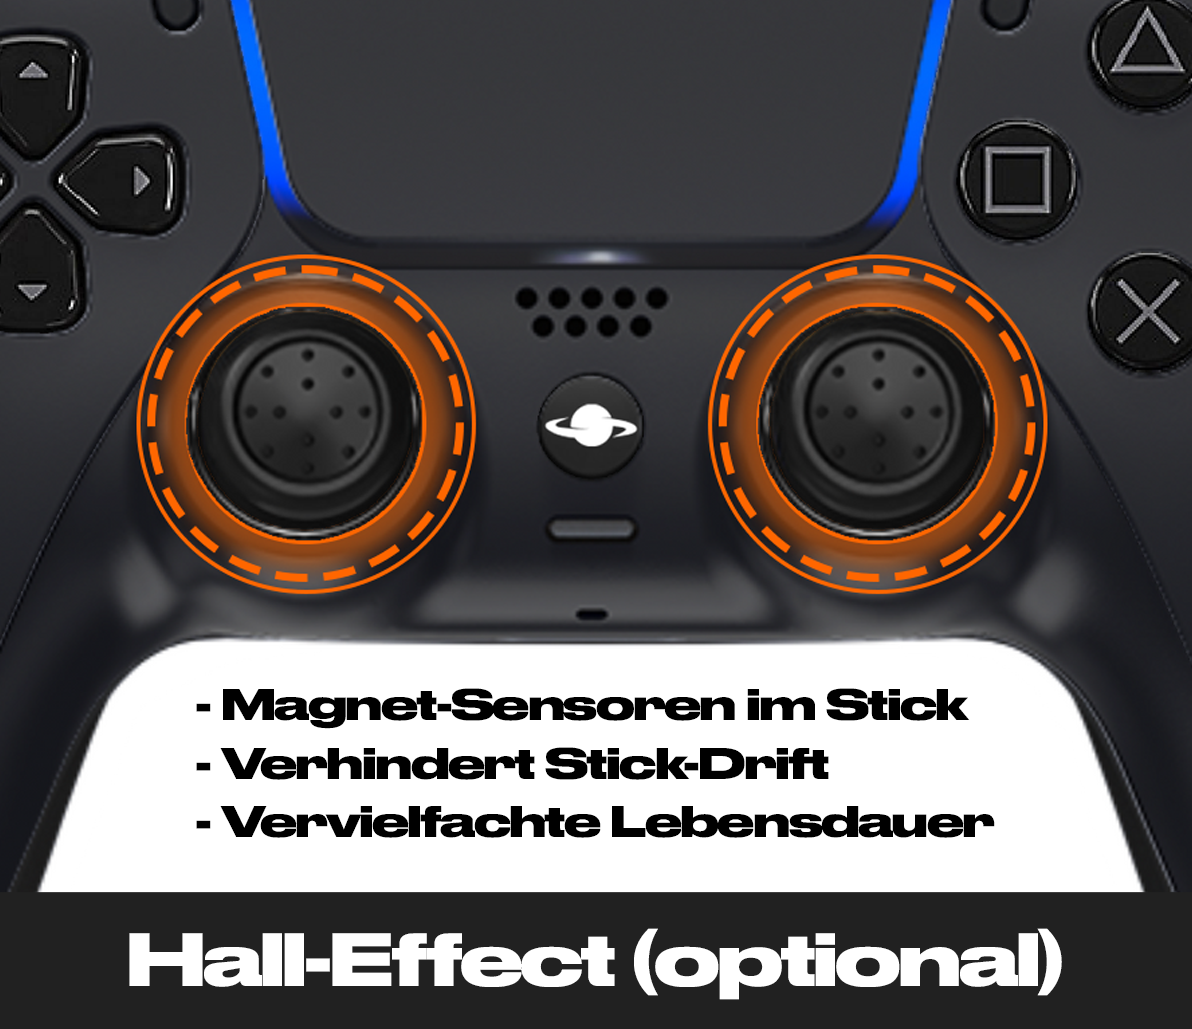 PS5 Custom Controller 'Chrom Blau'